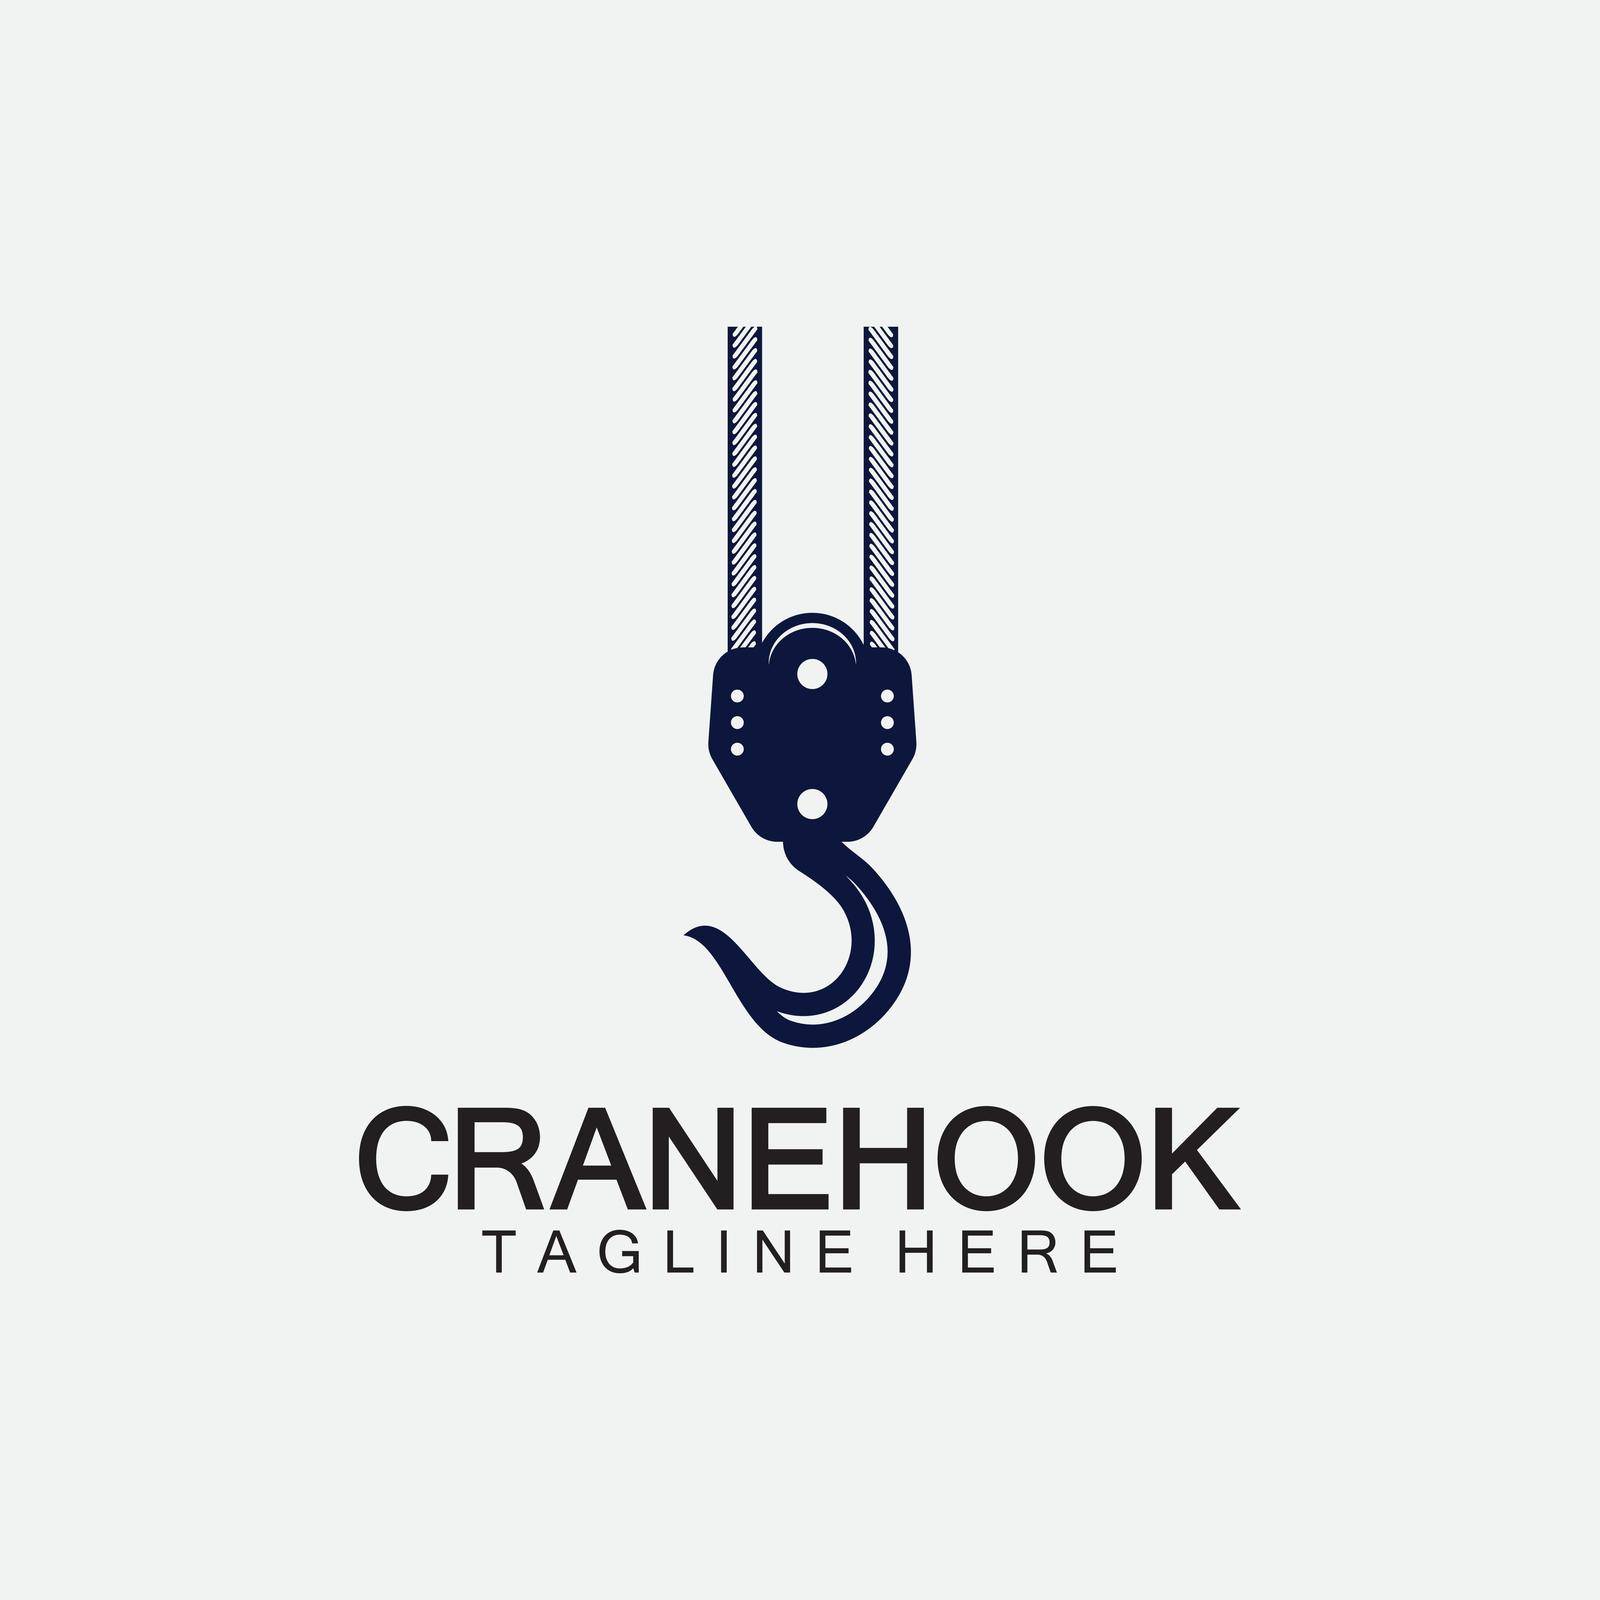 Crane hook logo icon vector illustration design  template by Mrsongrphc